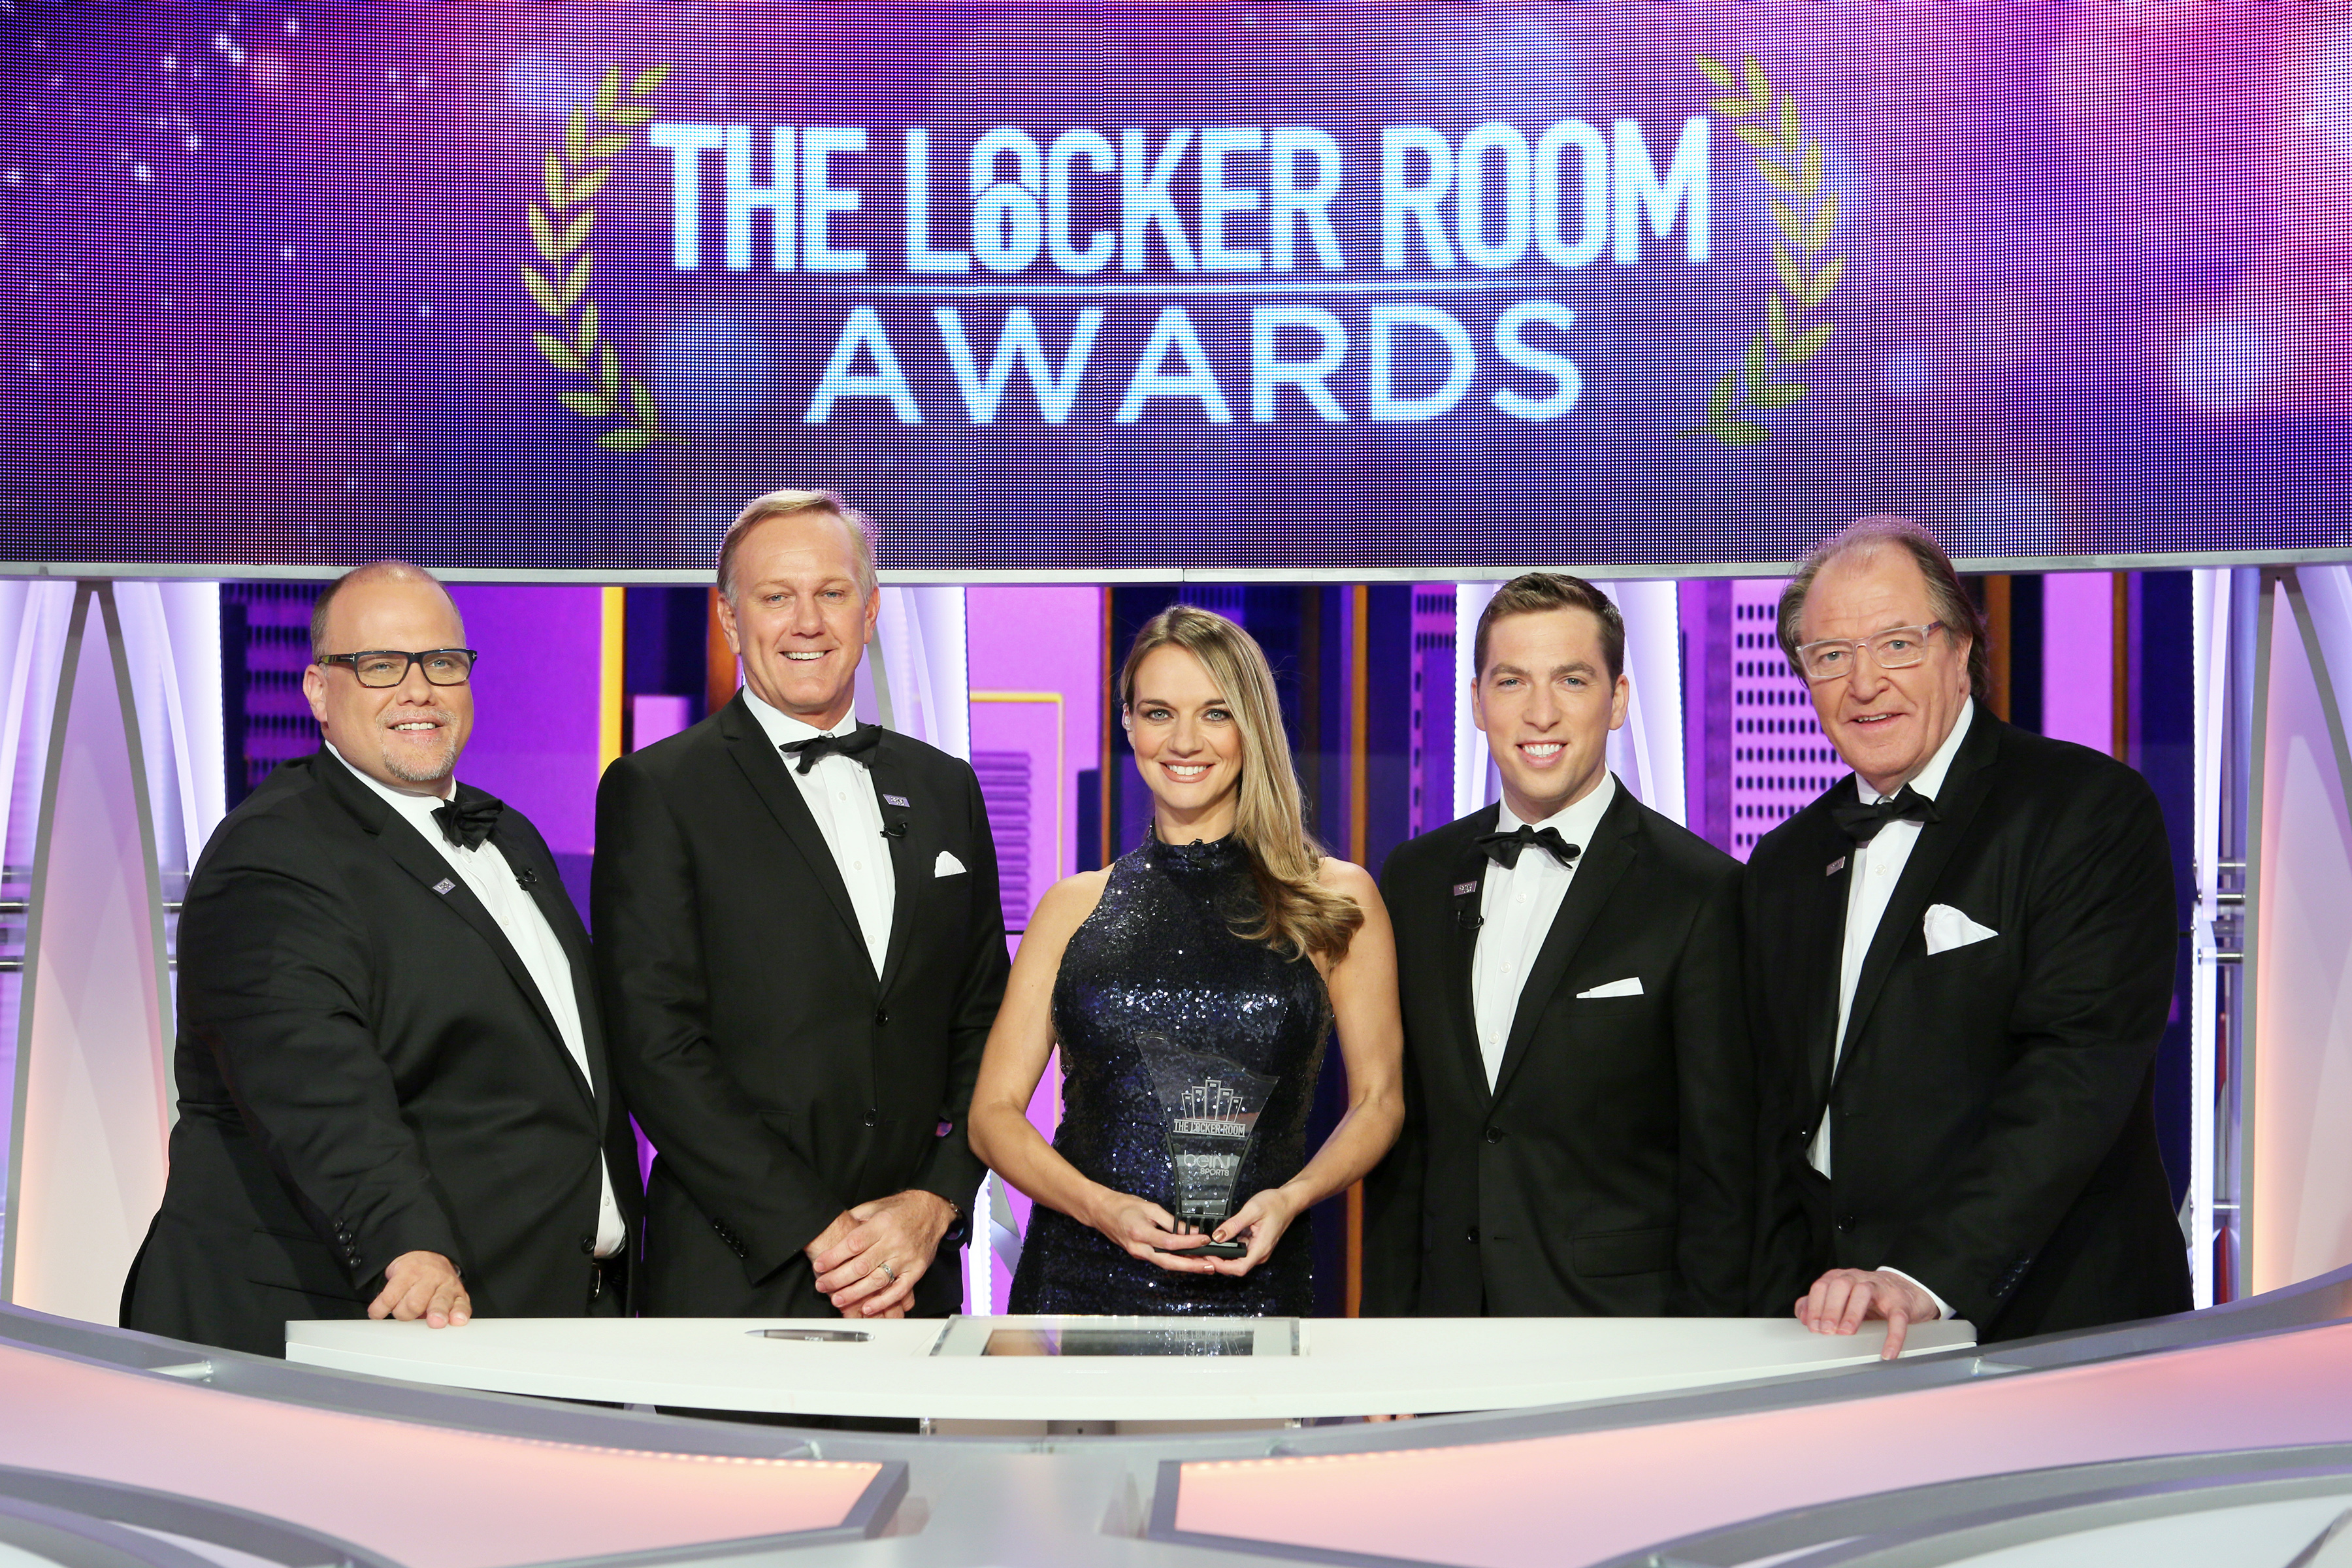 Phil Schoen, Gary Bailey, Kay Murray, Kevin Egan and Ray Hudson host “The Locker Room Awards” on beIN SPORTS